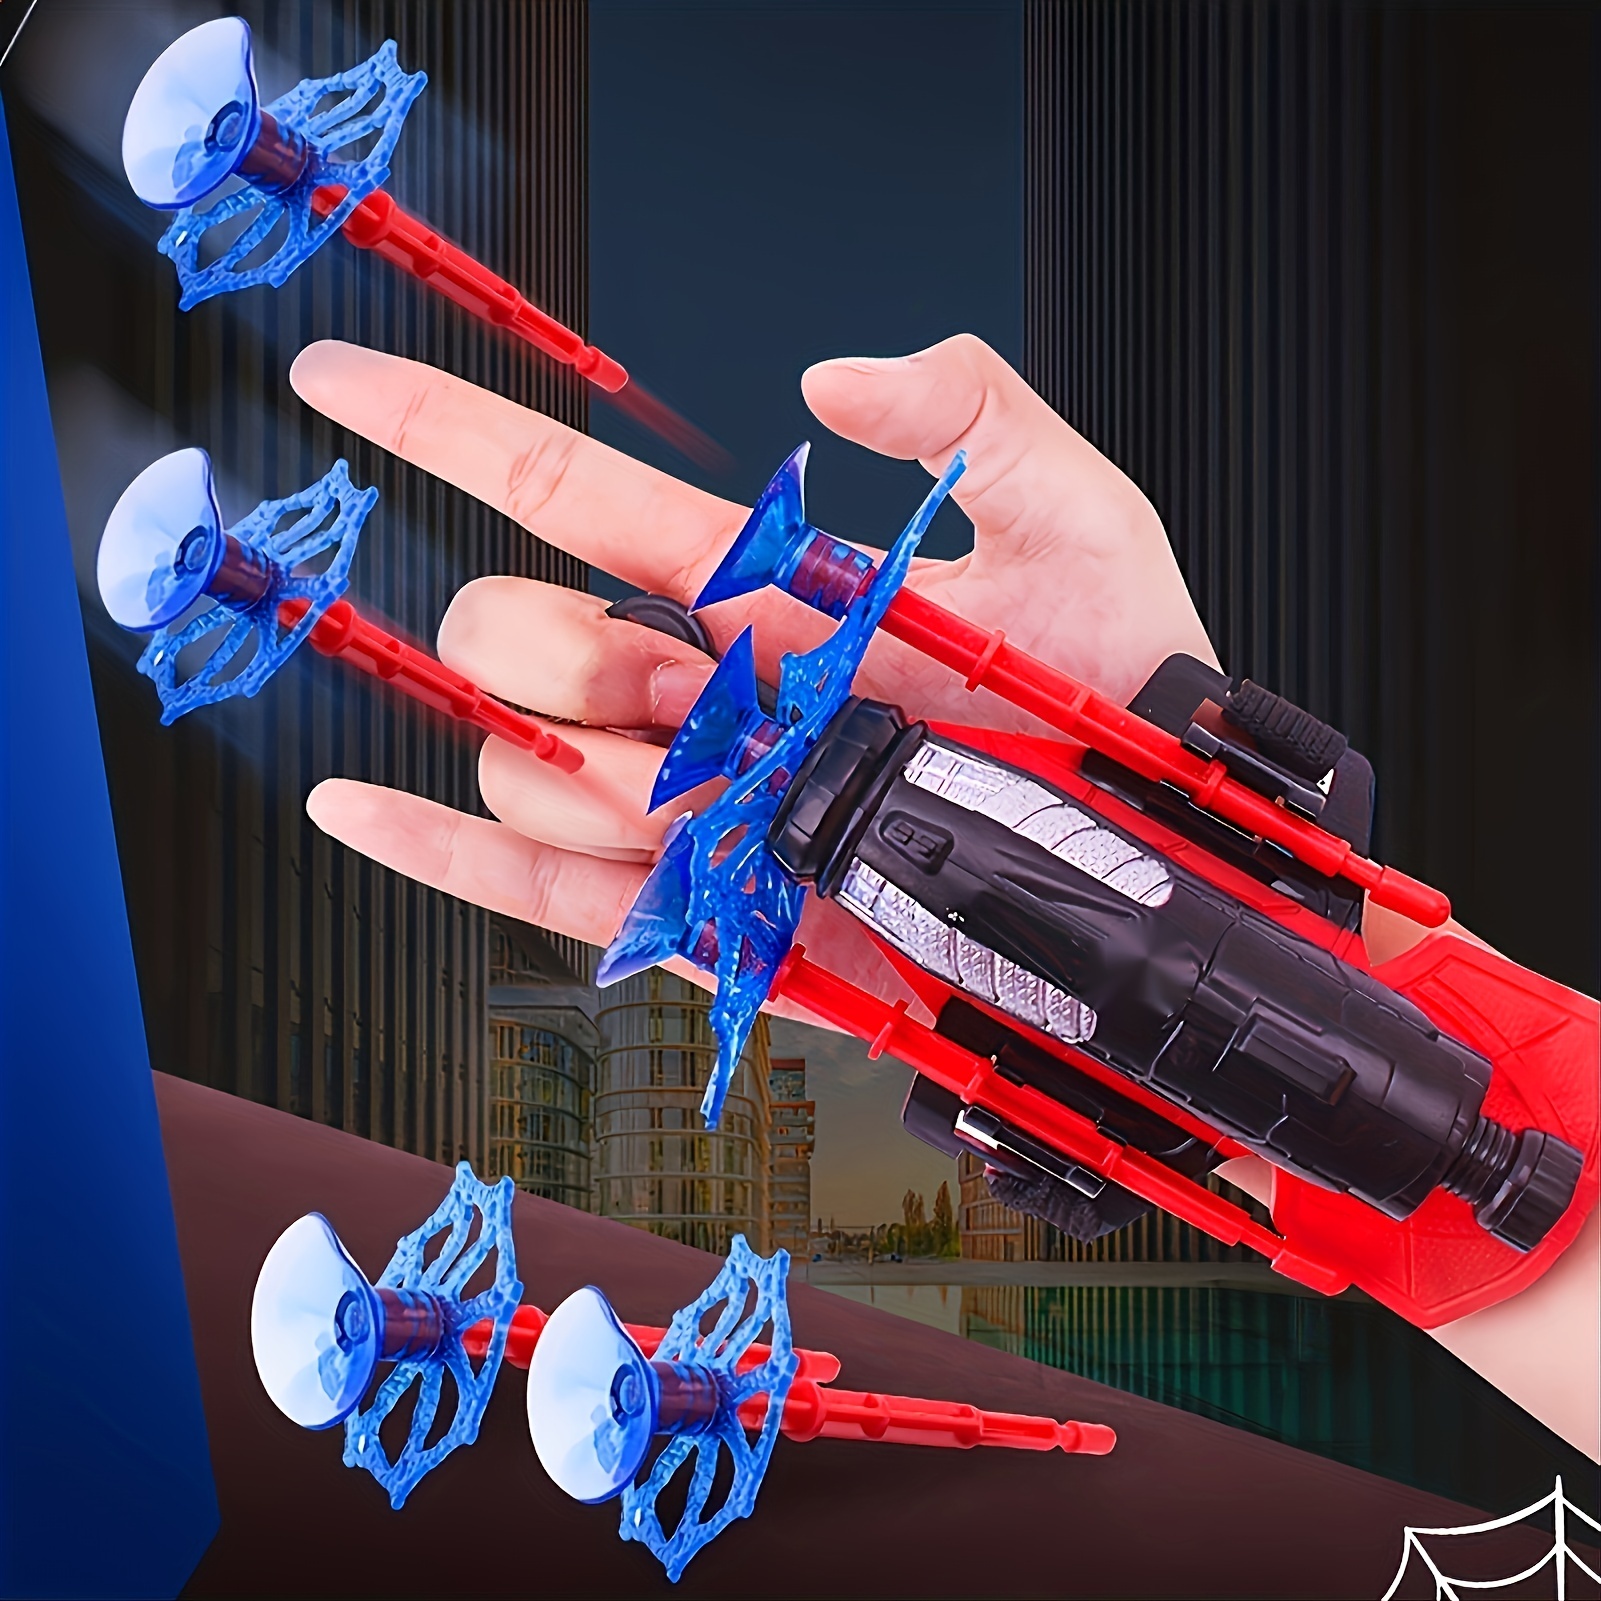 ML Legends Spiderman Web Shooters Toys Spider Man Wrist Launcher